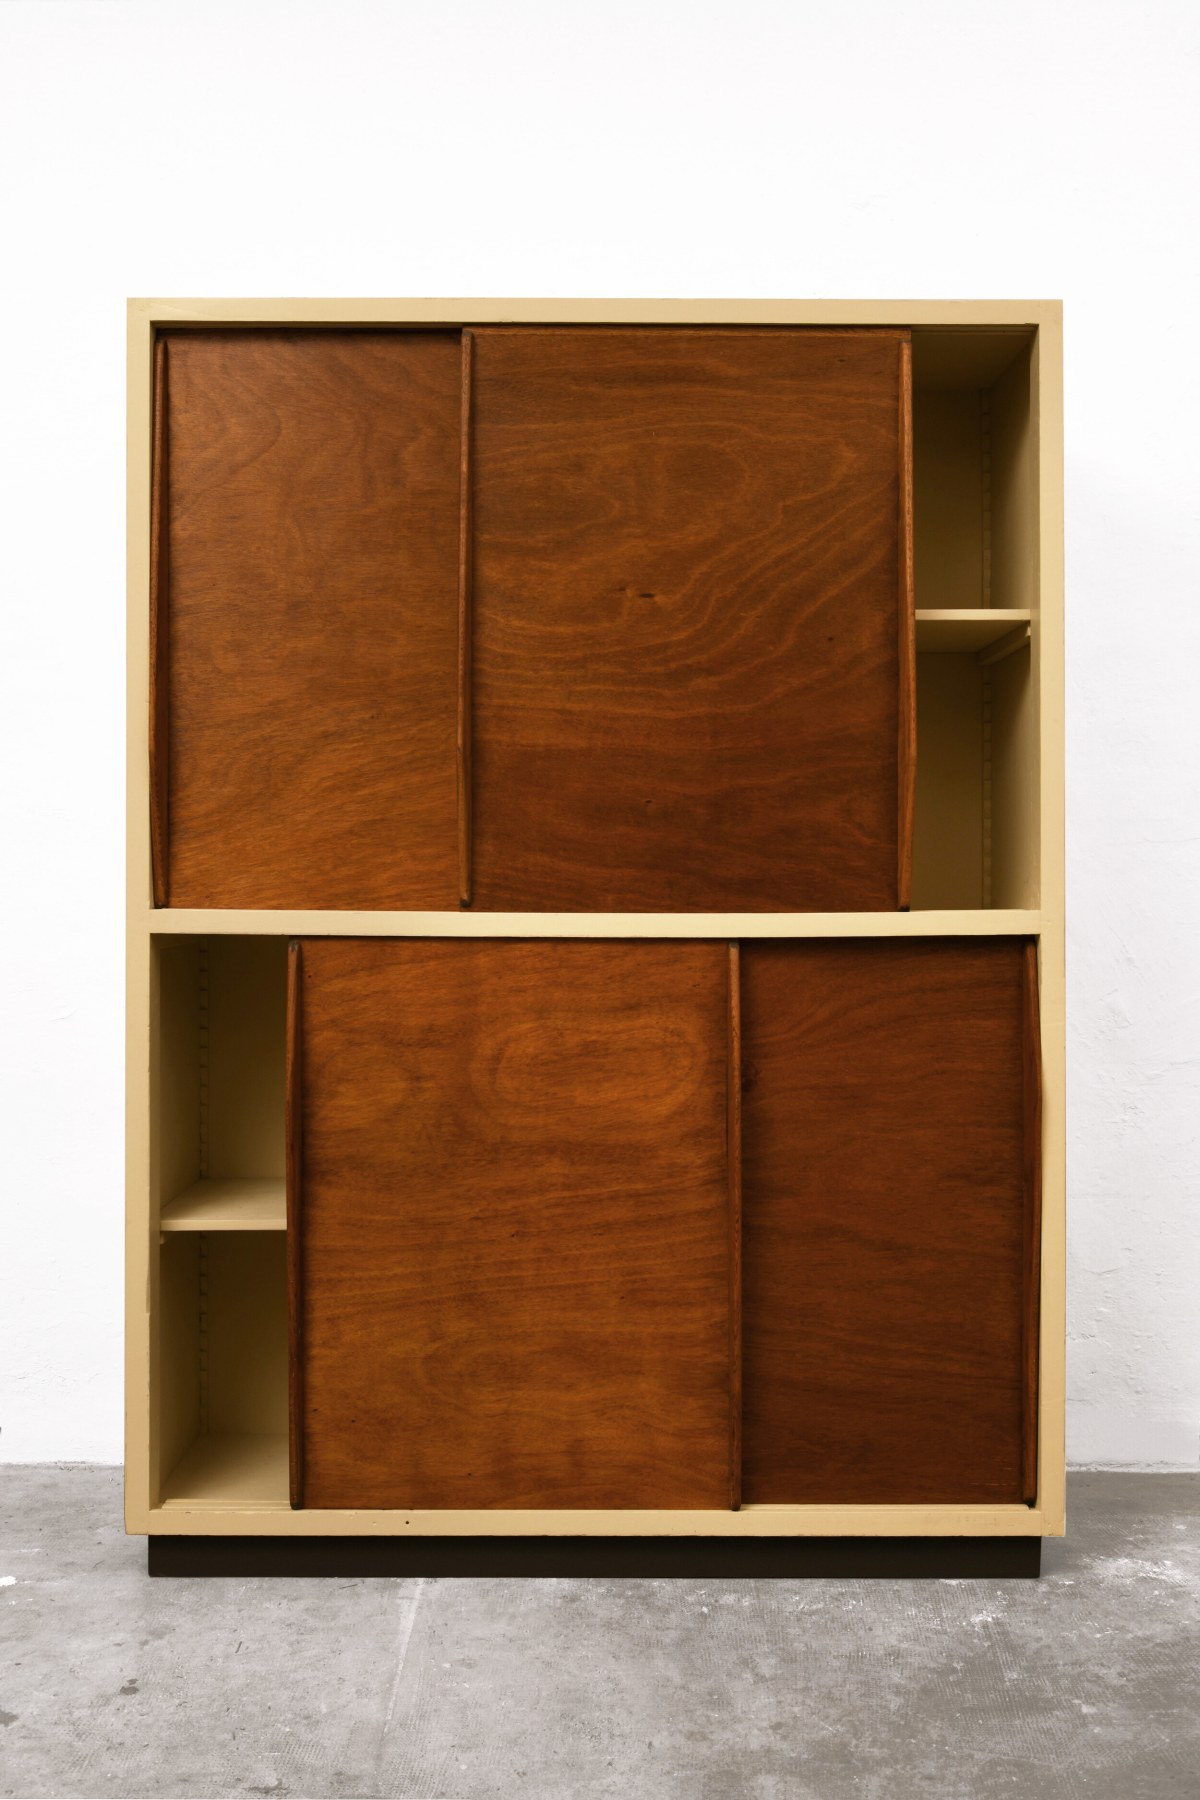 Le Corbusier - Collections - Magen H Gallery